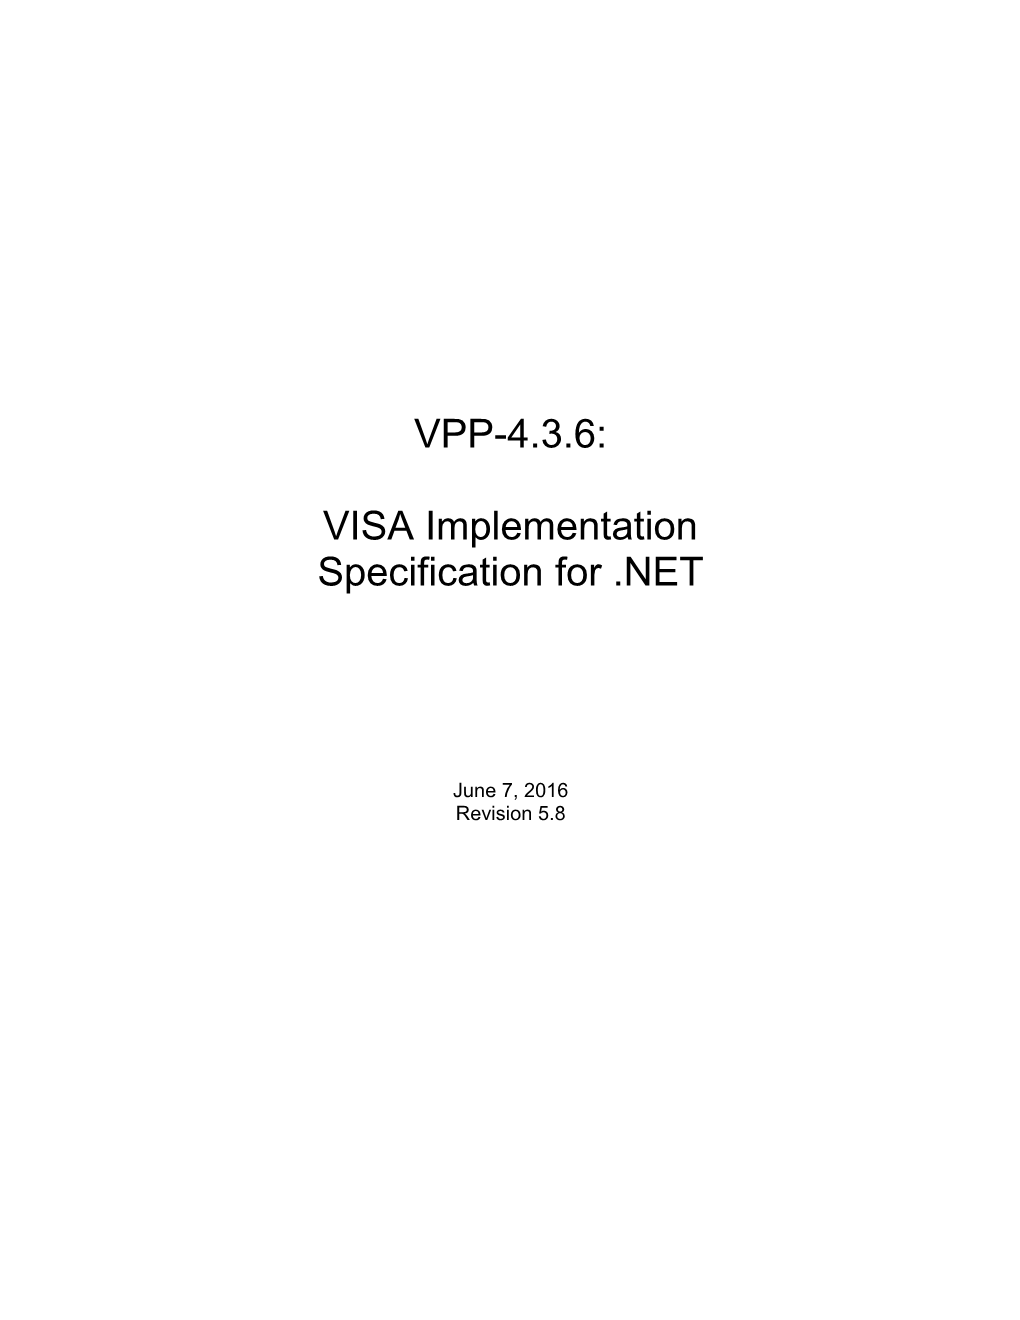 VISA Implementation Specification for COM s2